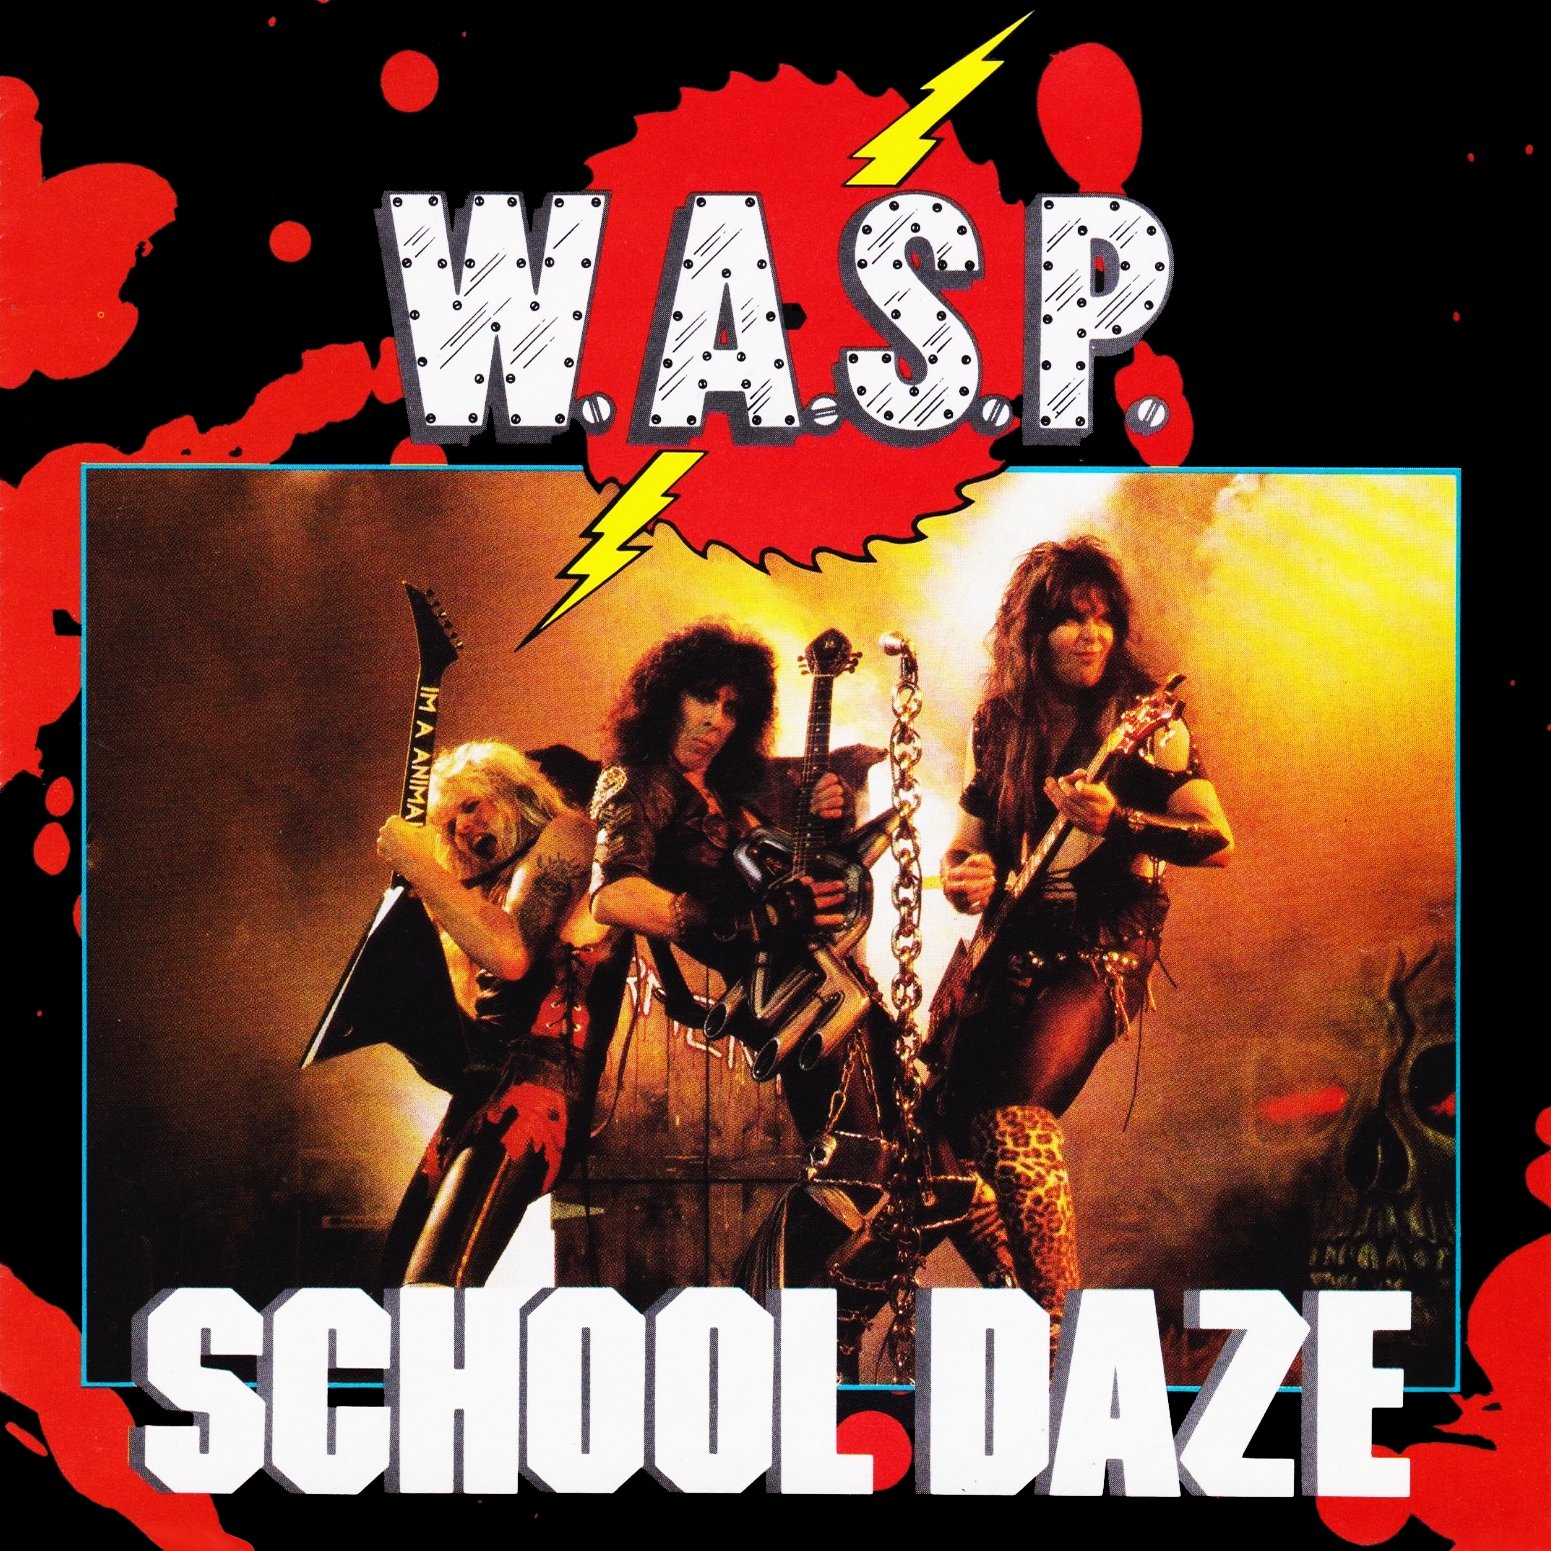 W a s p песни. Wasp группа 1985. Группа w.a.s.p. обложки. W.A.S.P. обложки альбомов. Wasp обложки альбомов.